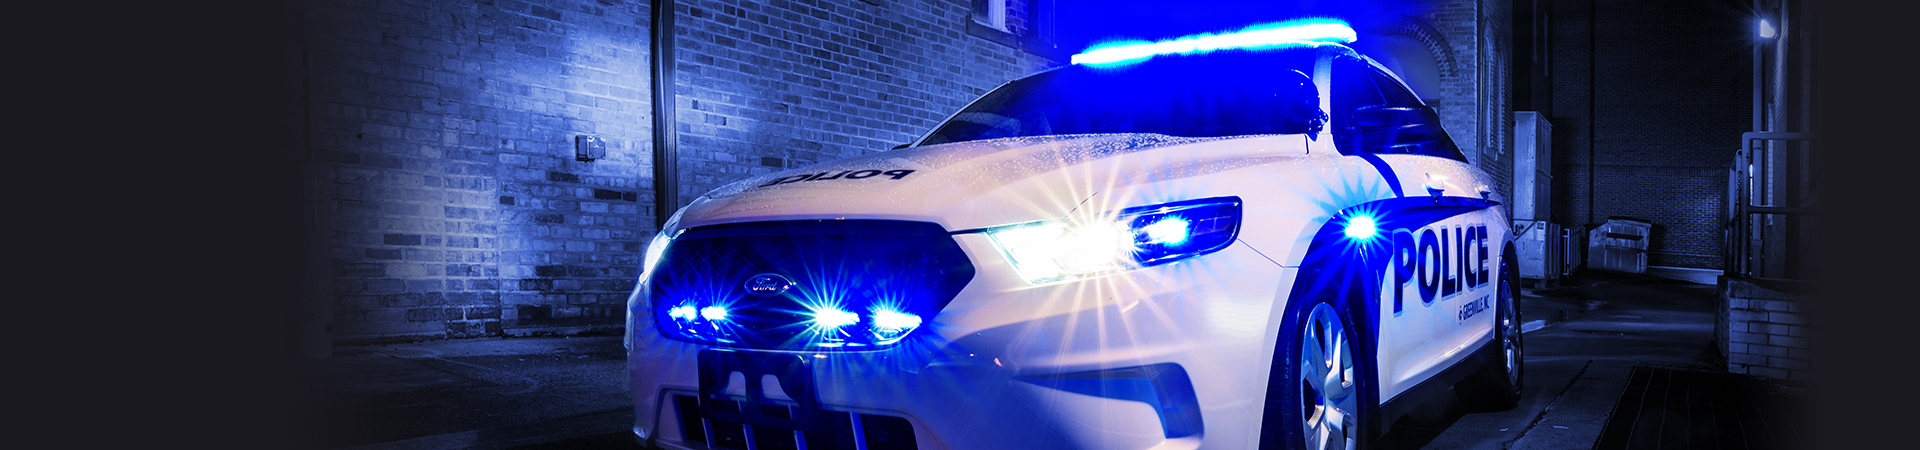 Police Car Banner Image